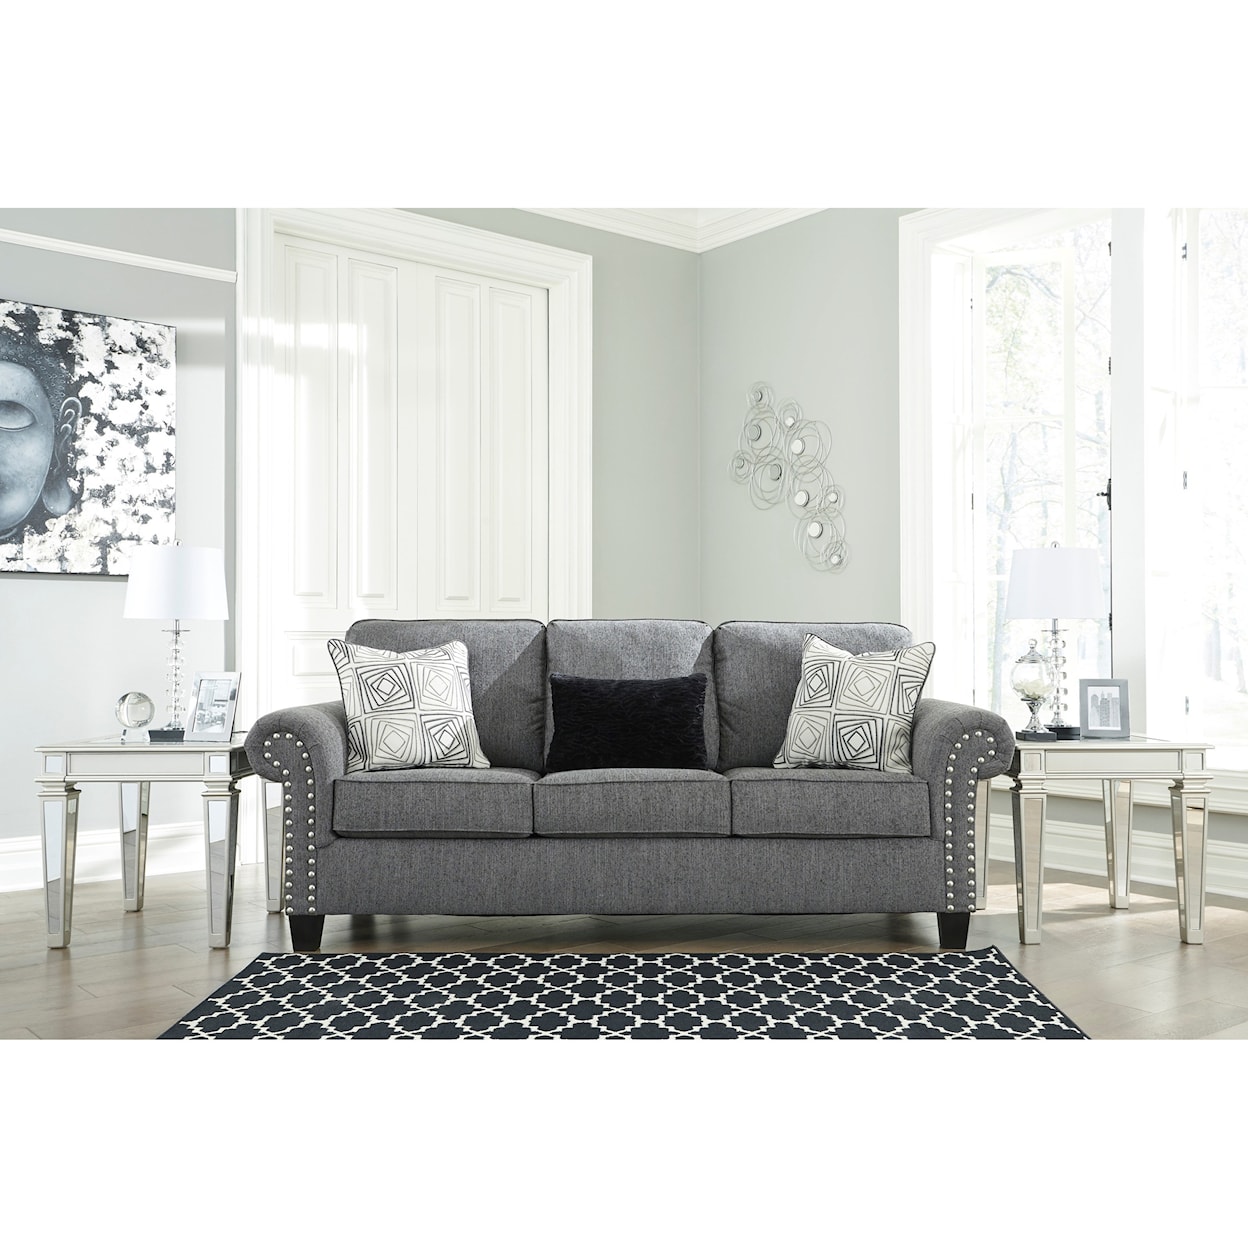 Benchcraft Agleno Sofa